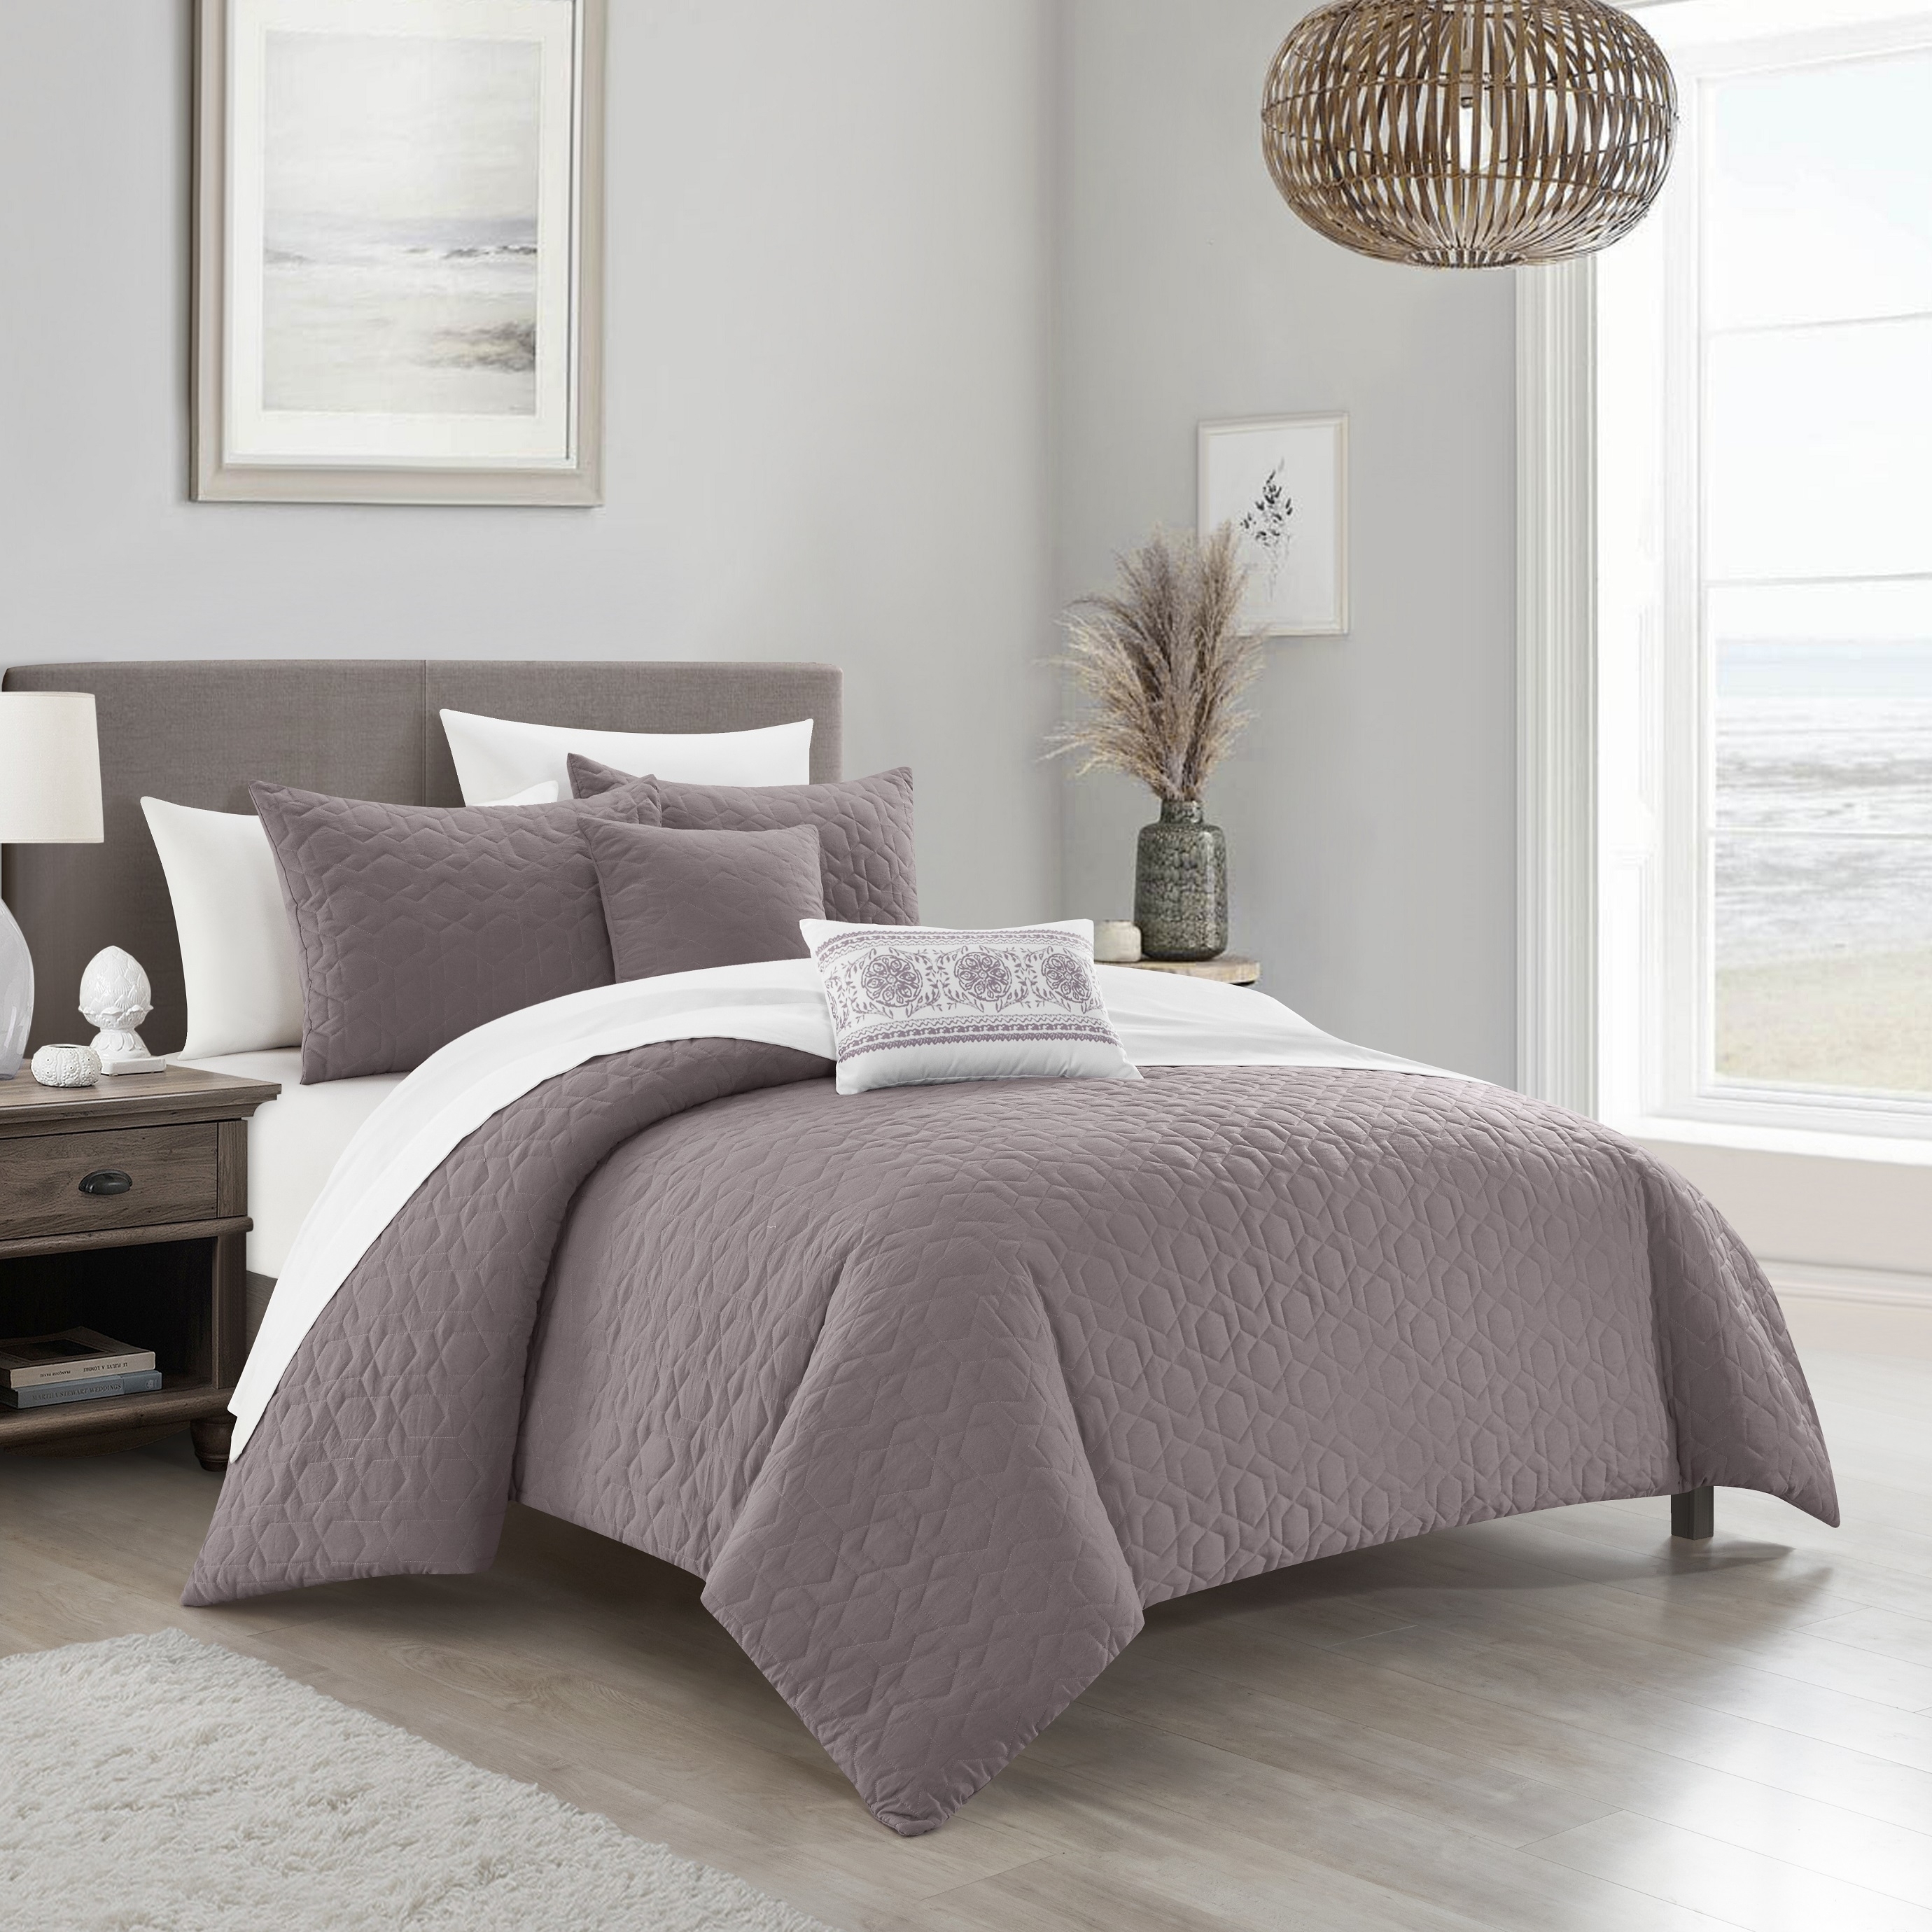 NY&C Home Cavina 5 Piece Comforter Set Geometric Hexagonal Pattern - Lavender, King